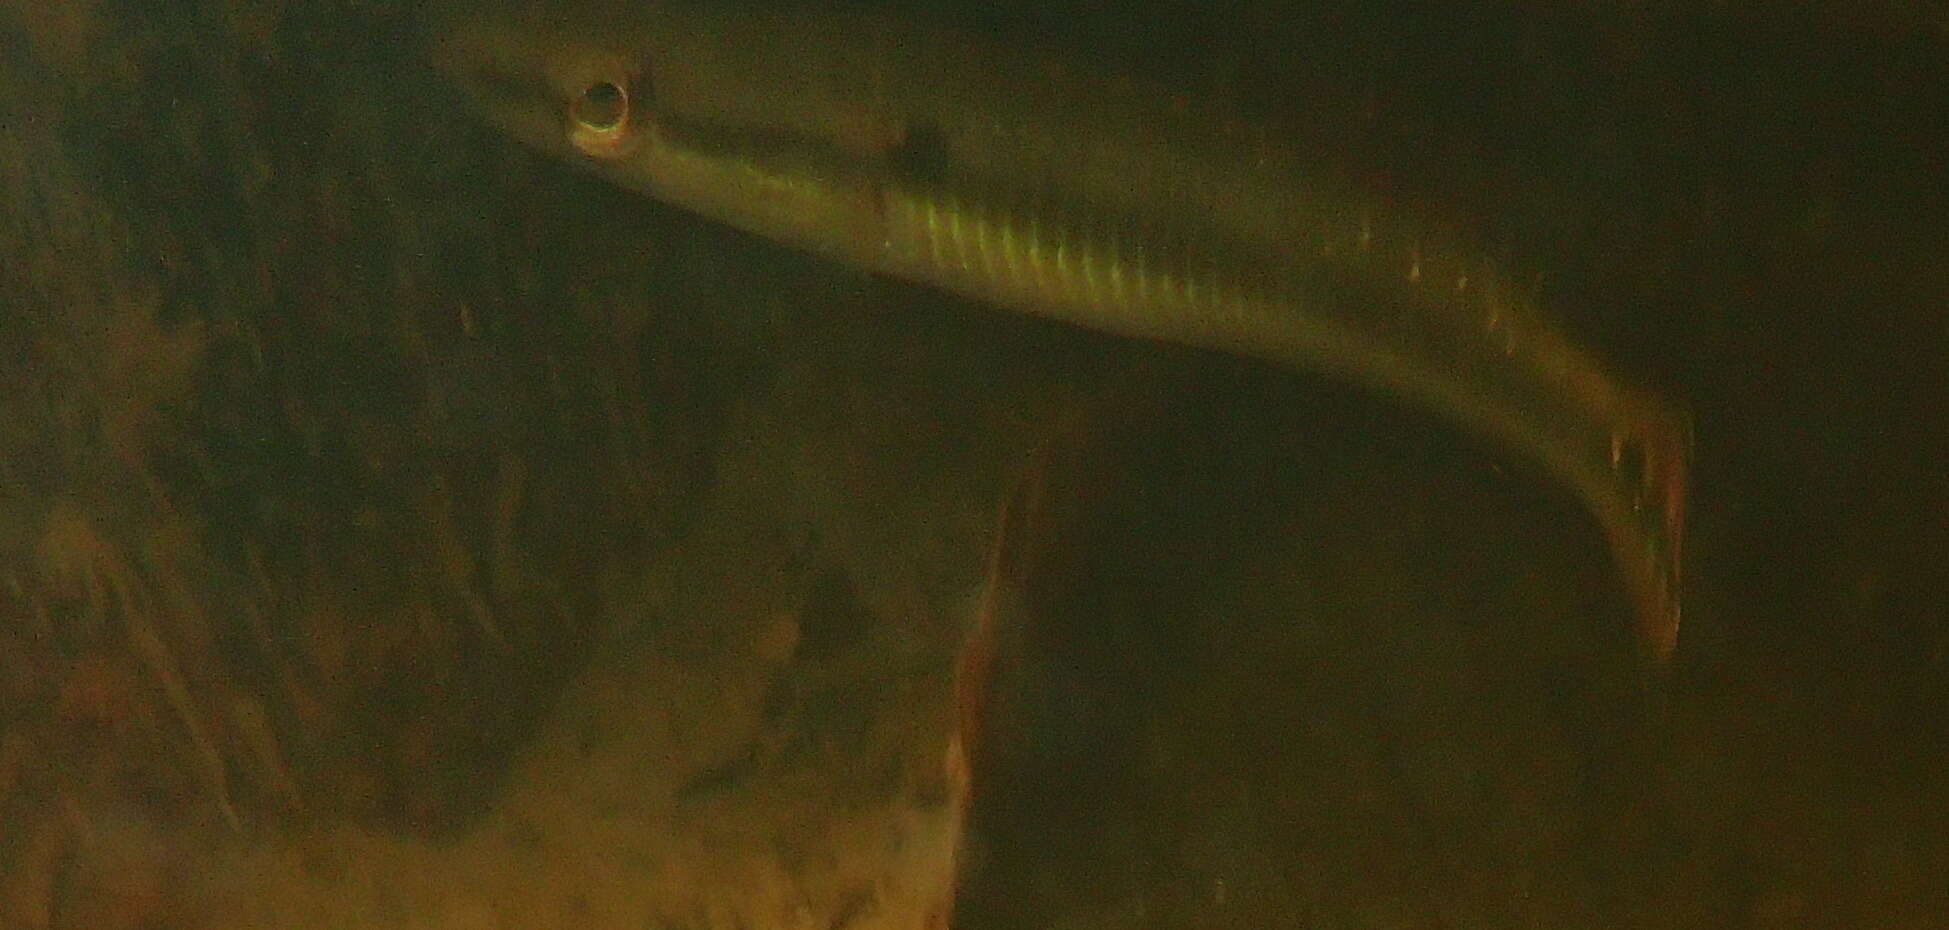 Image of Pike cichlid